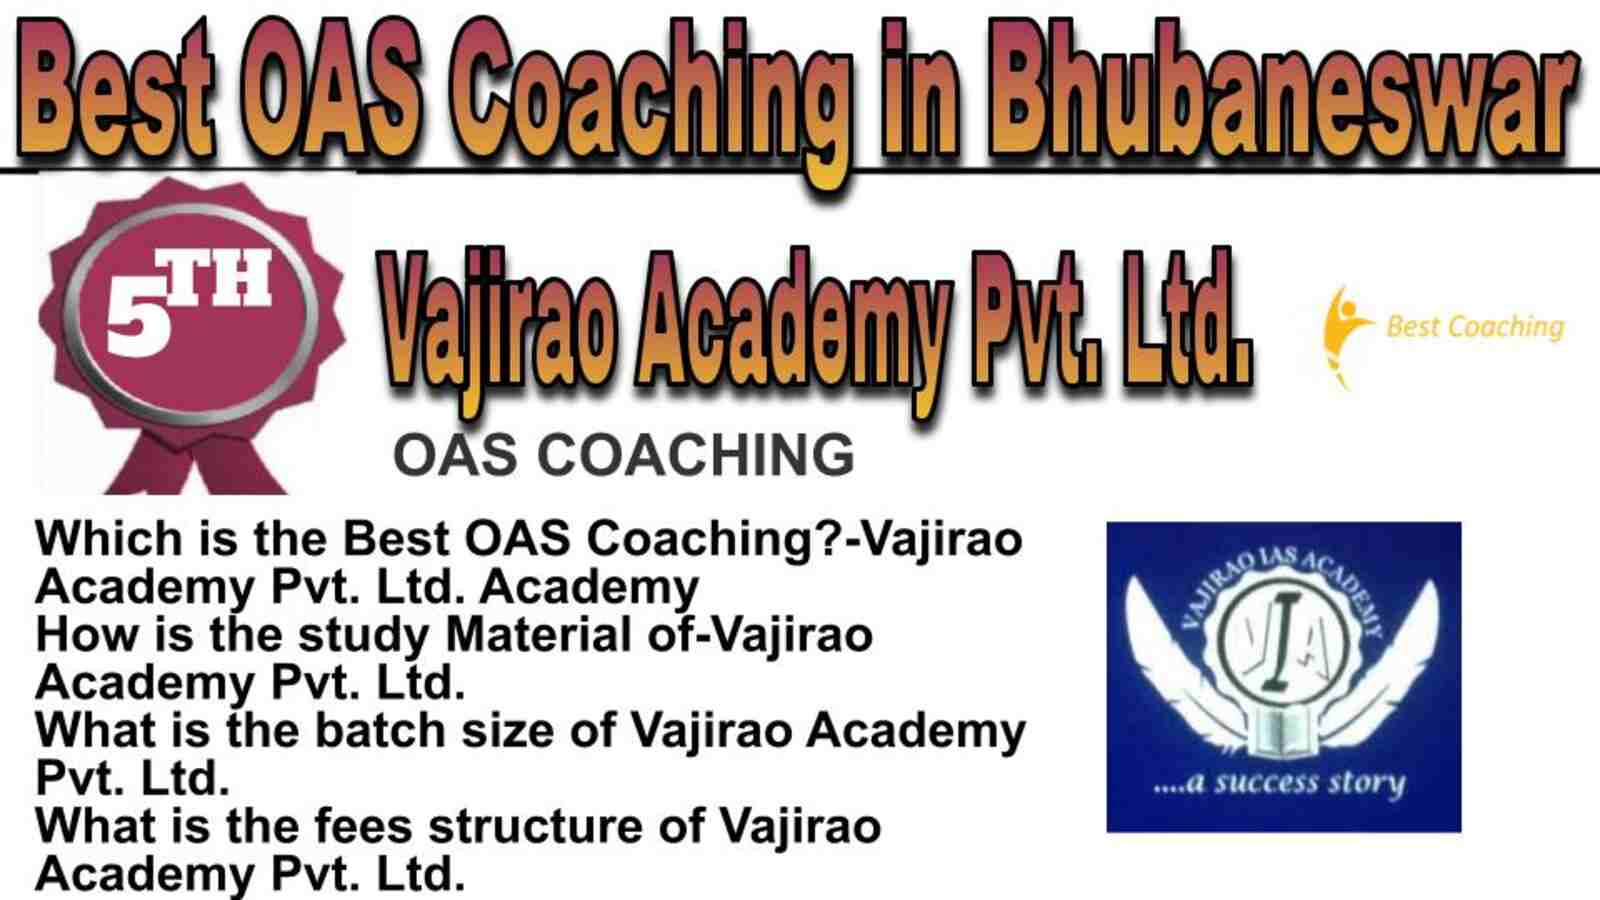 Rank 5 best OAS coaching in Bhubaneswar